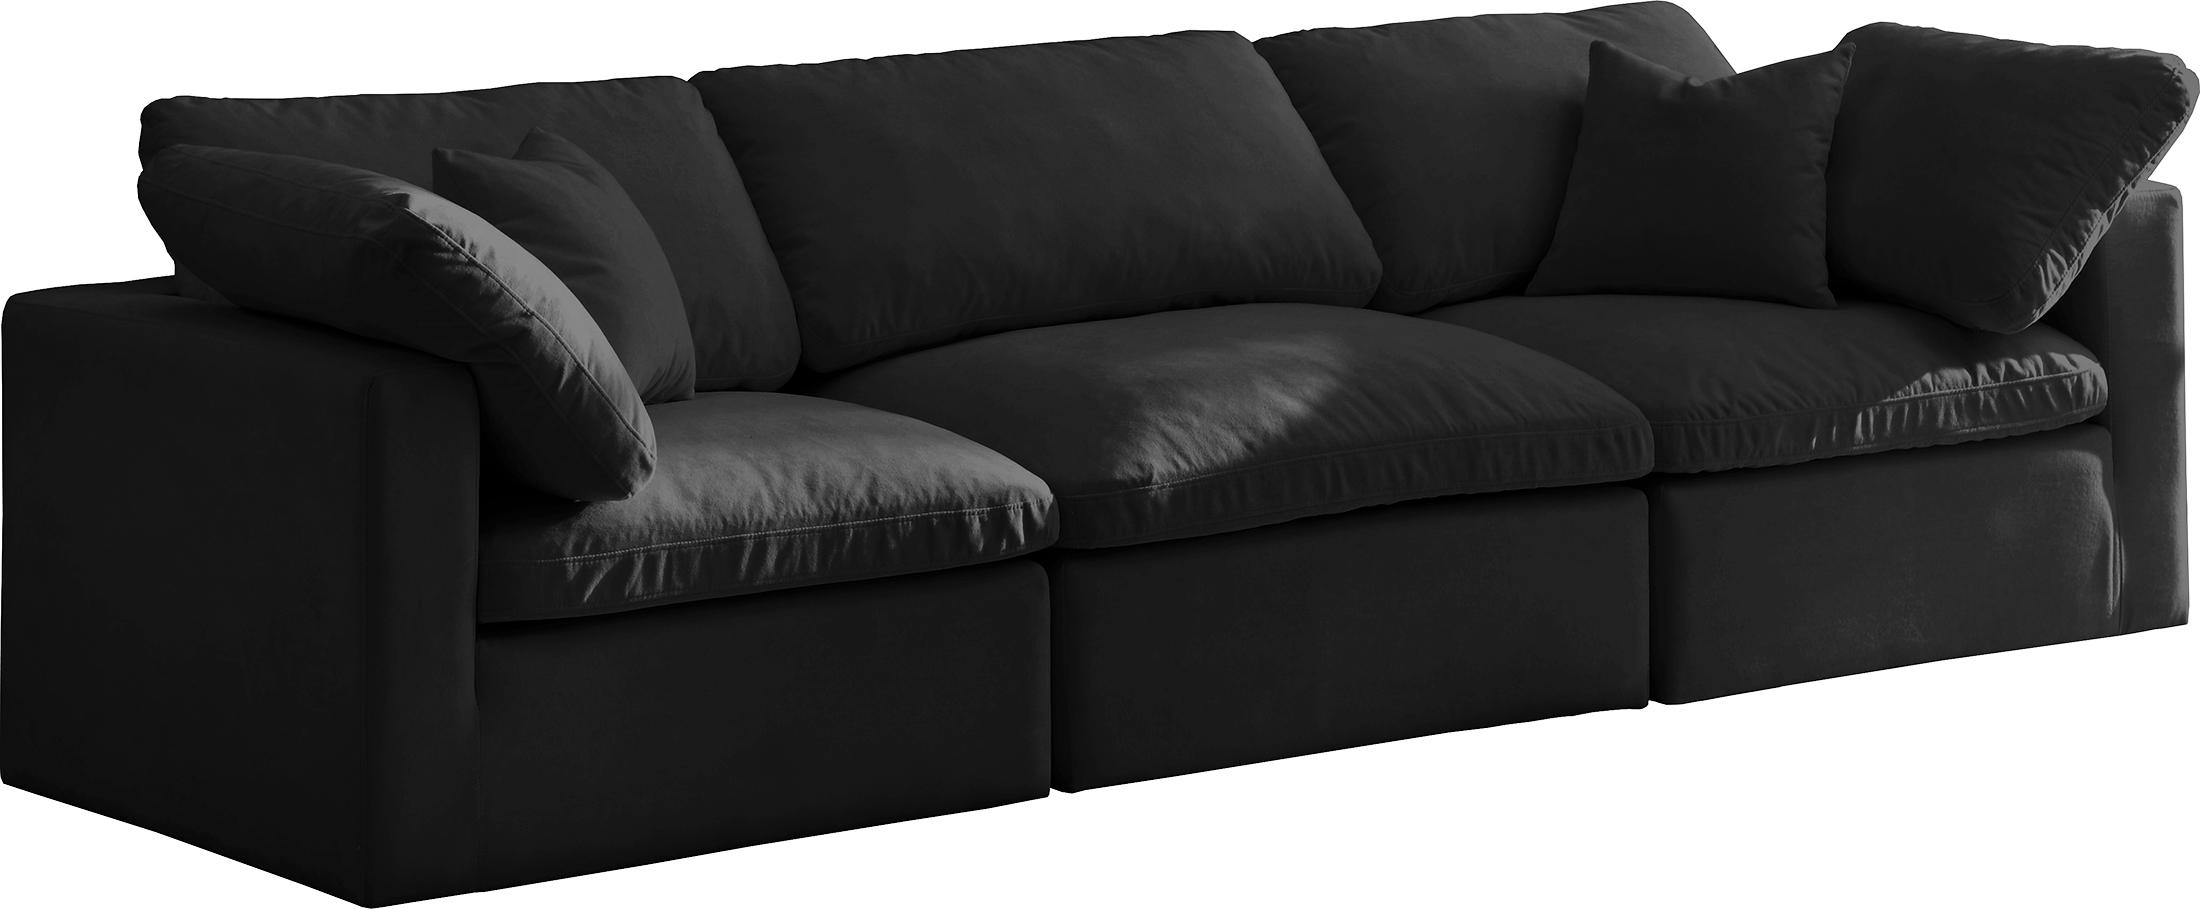 Contemporary, Modern Modular Sofa 602Black-S105 602Black-S105 in Black Fabric